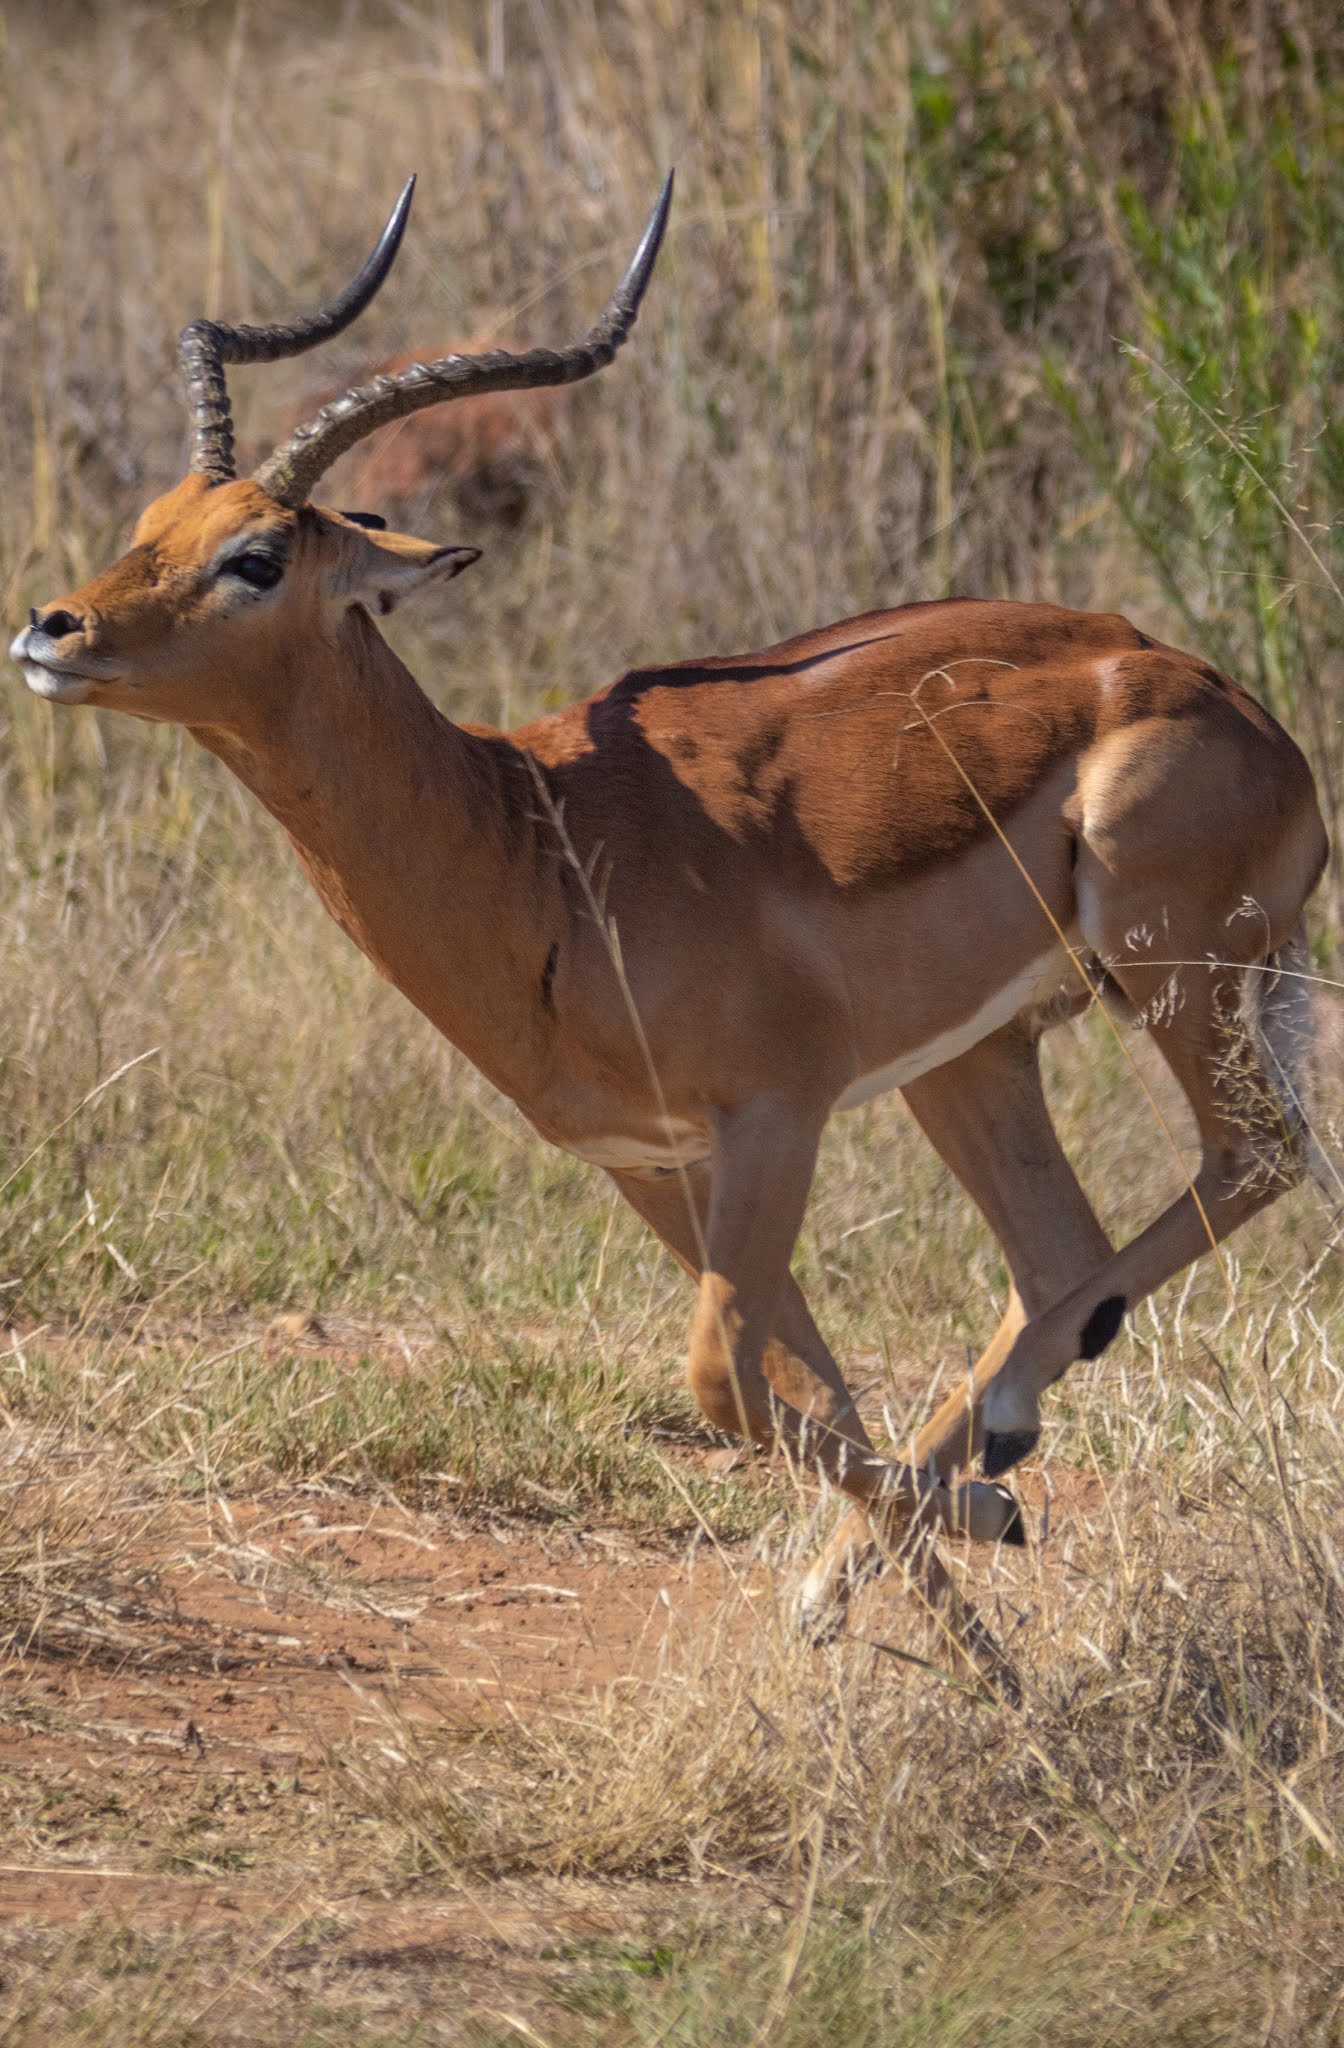 Gazelle running after sensing danger.